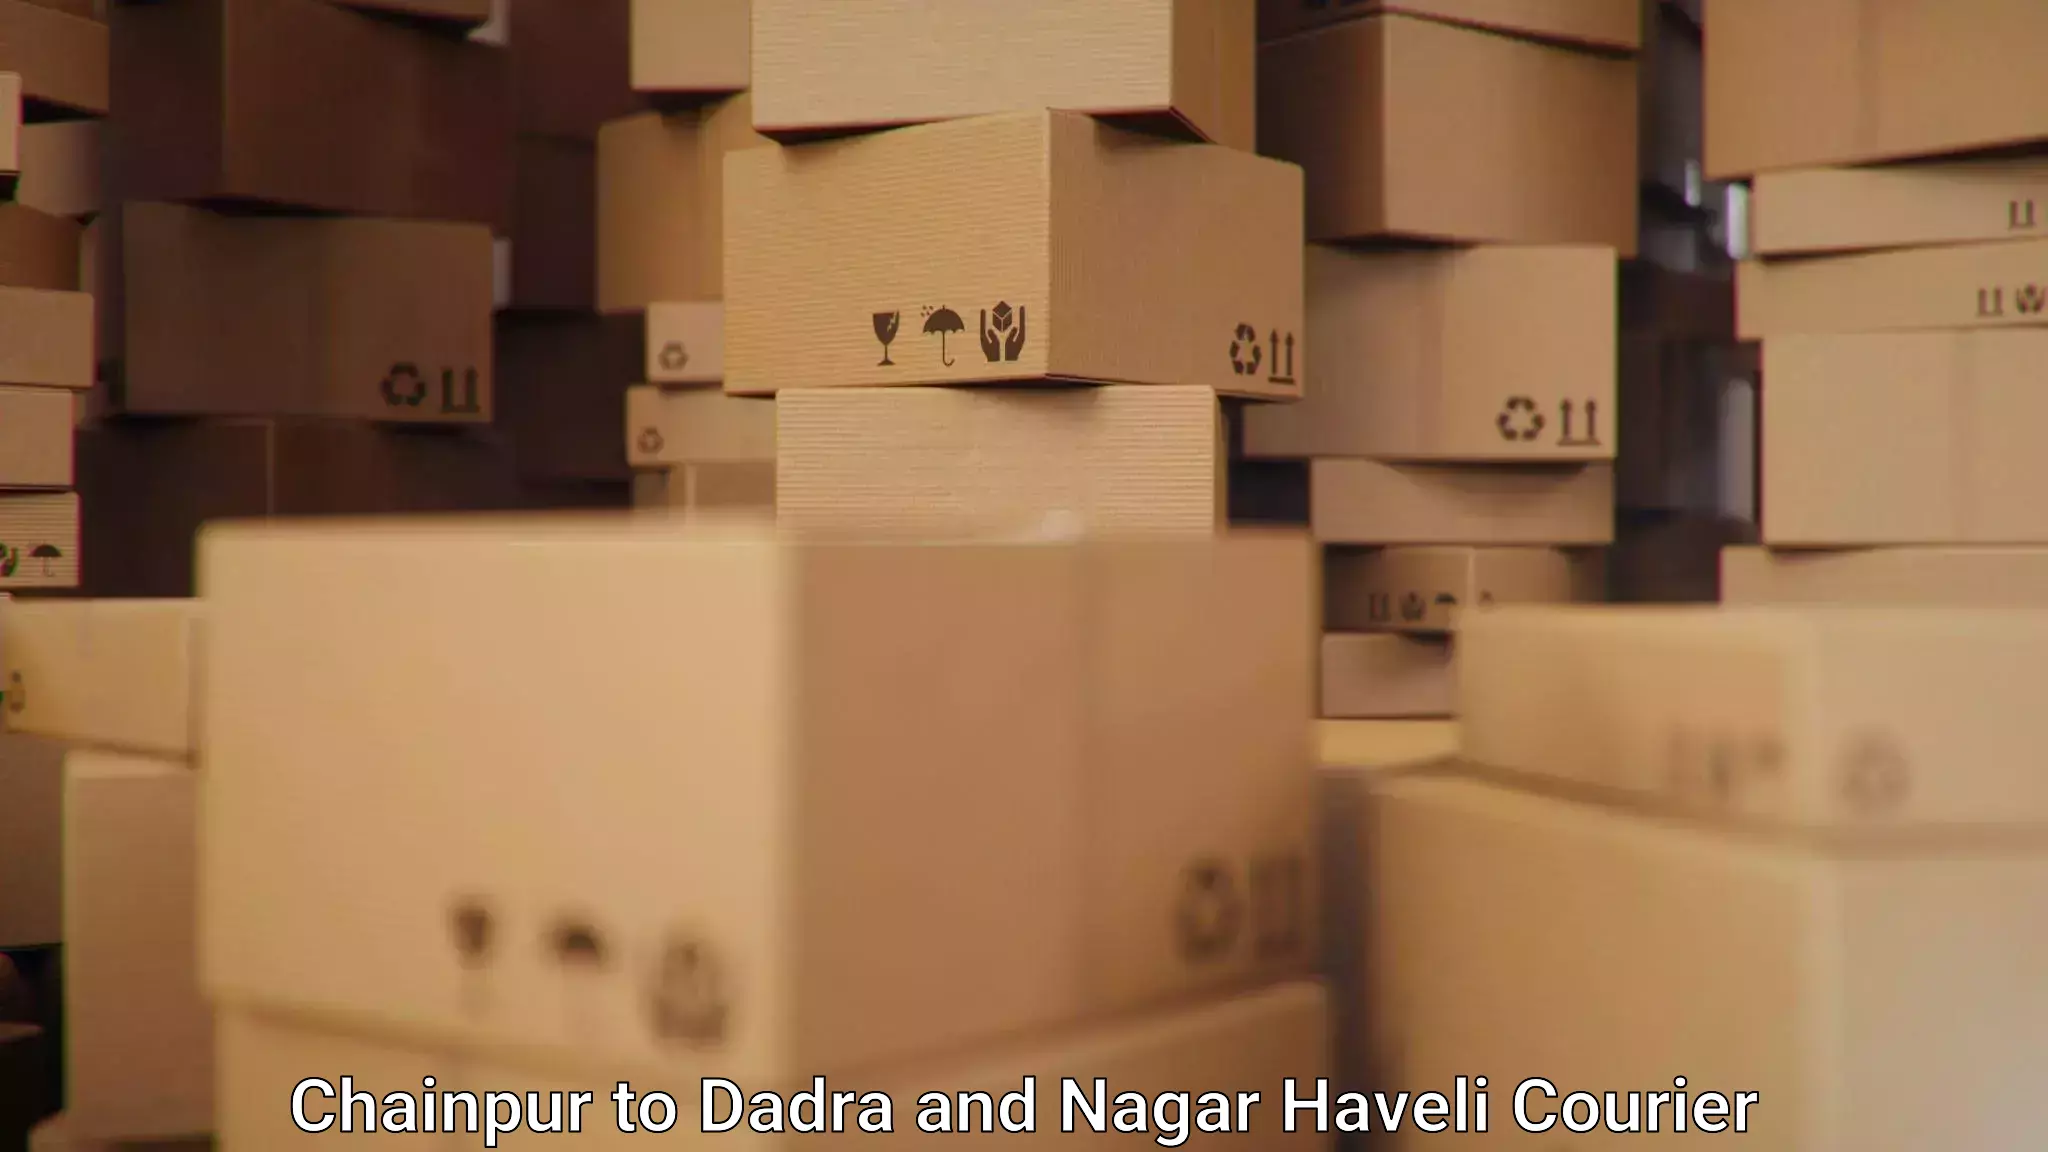 Logistics management Chainpur to Dadra and Nagar Haveli